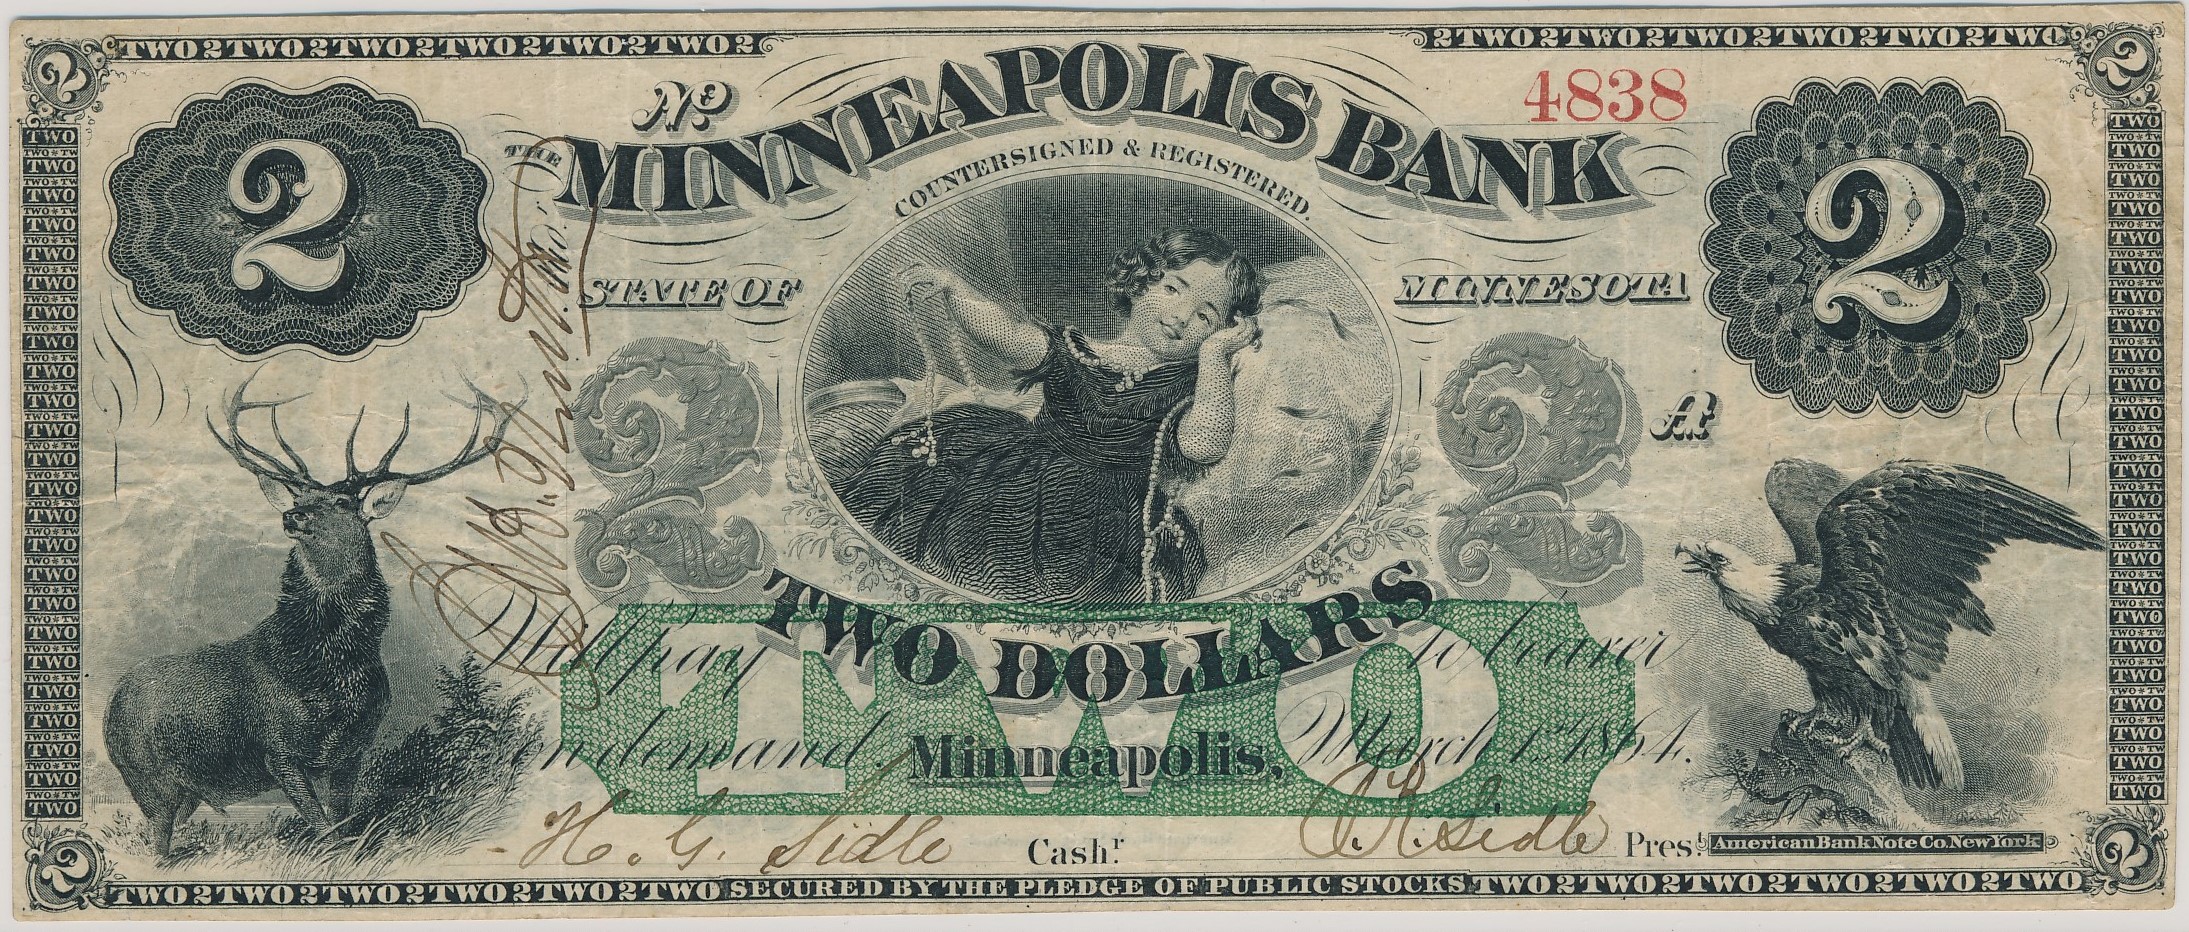 Minneapolis Bank